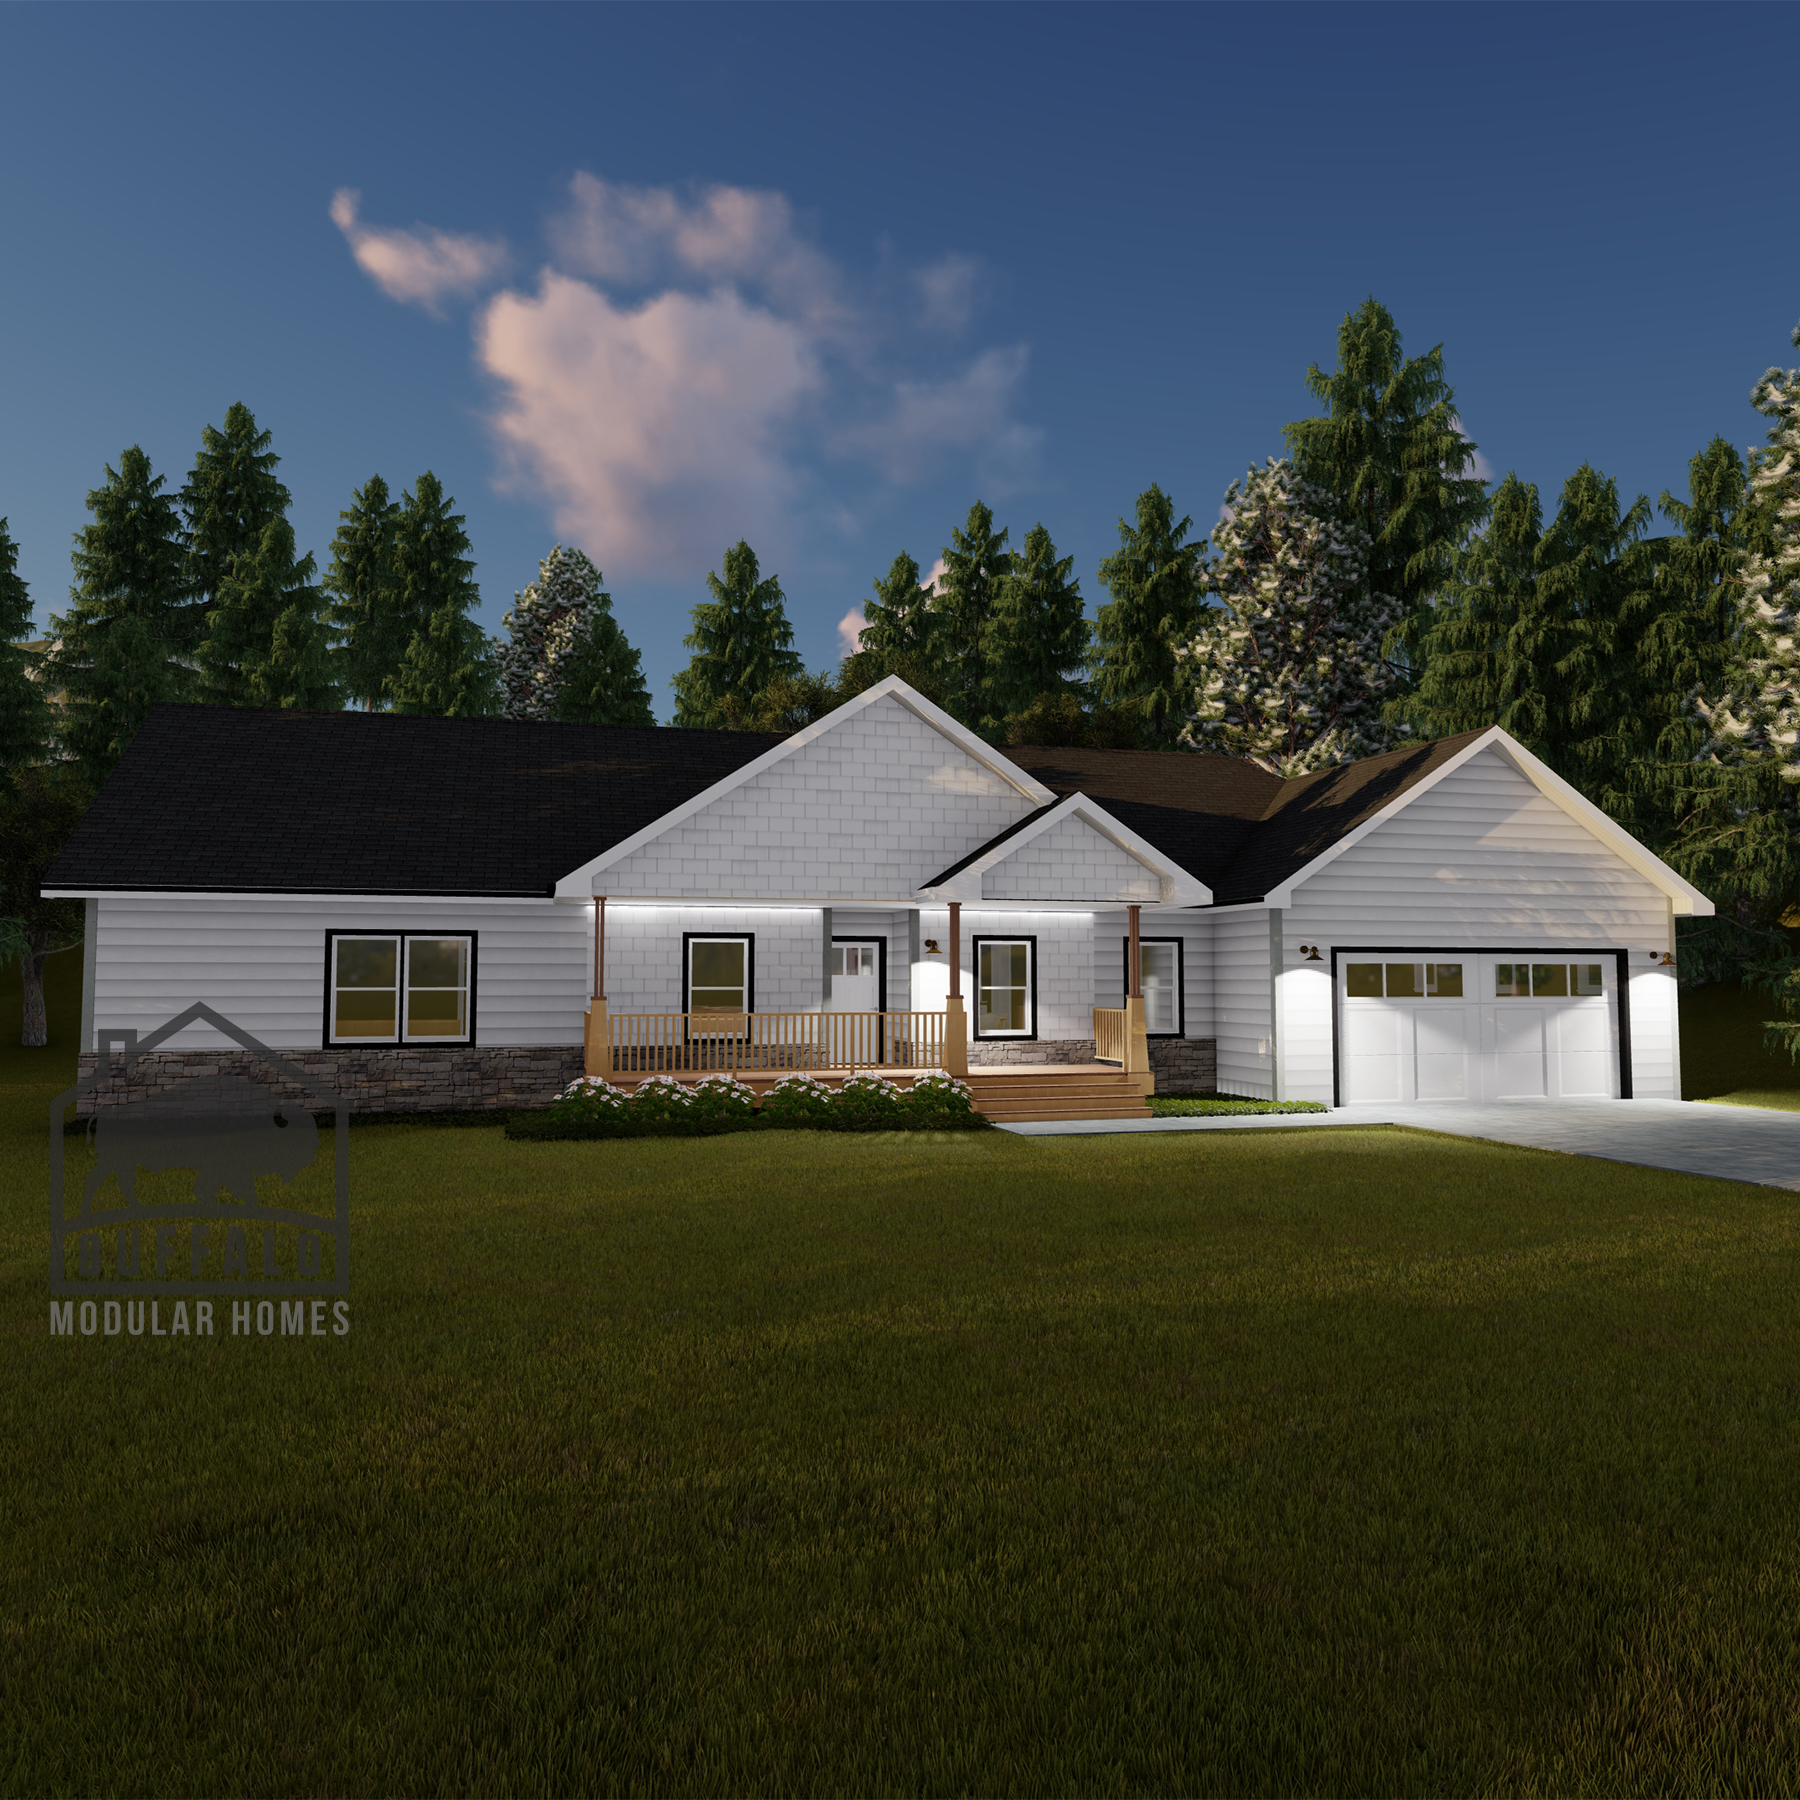 Limited series prefab modular home plan rendering